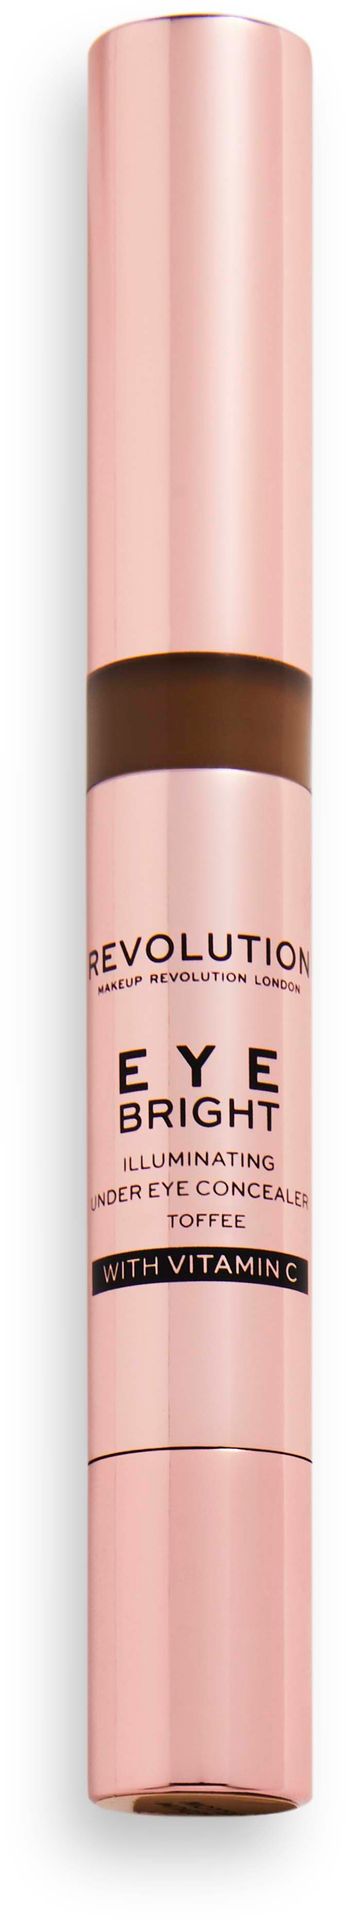 Makeup Revolution Bright Eye Concealer Toffee